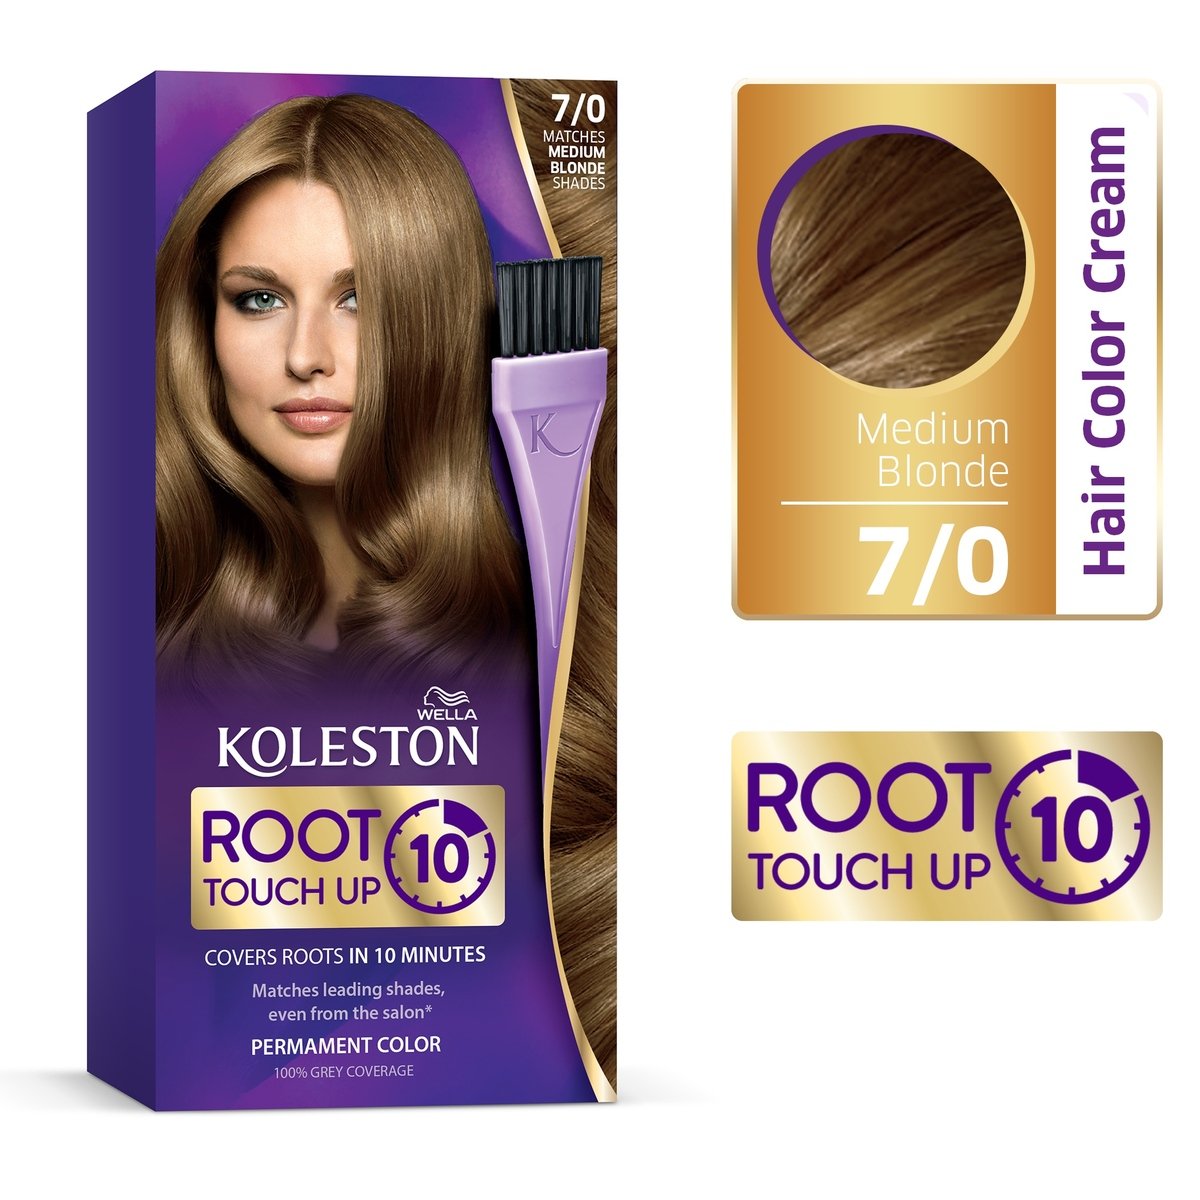 Koleston Root Touch Up 7/0 Medium Blonde 1 pkt